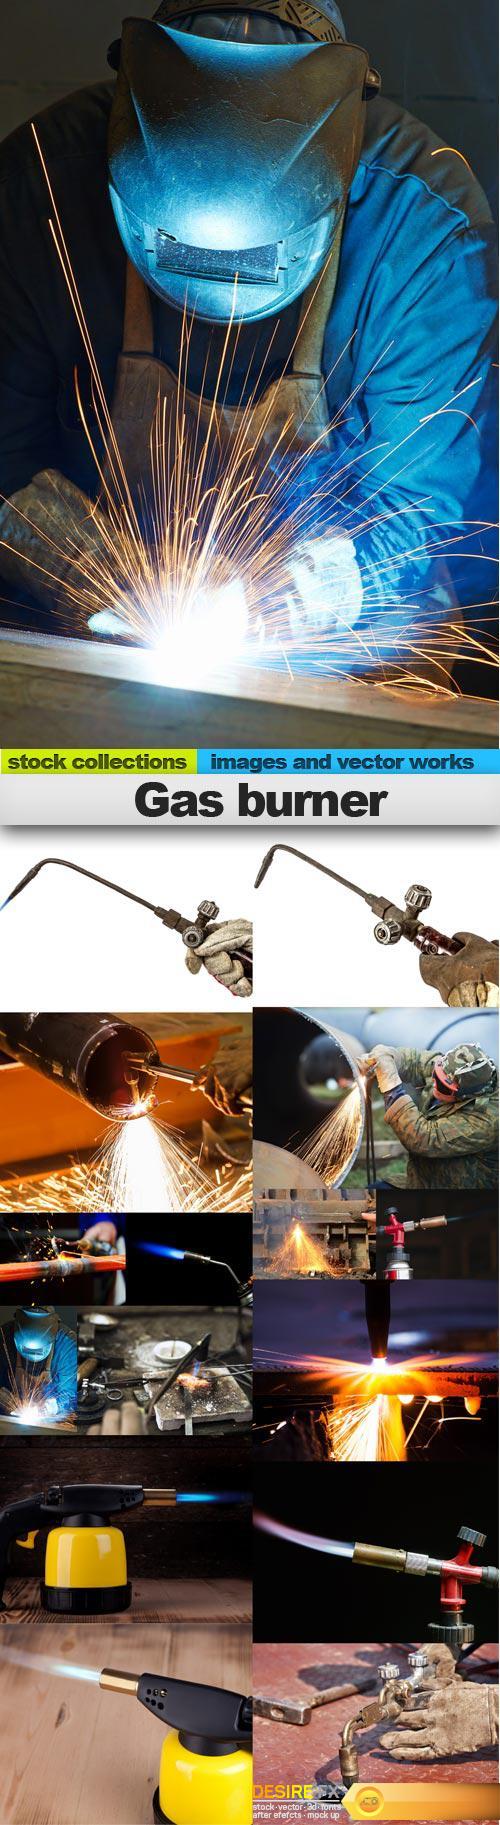 Gas burner, 15 x UHQ JPEG